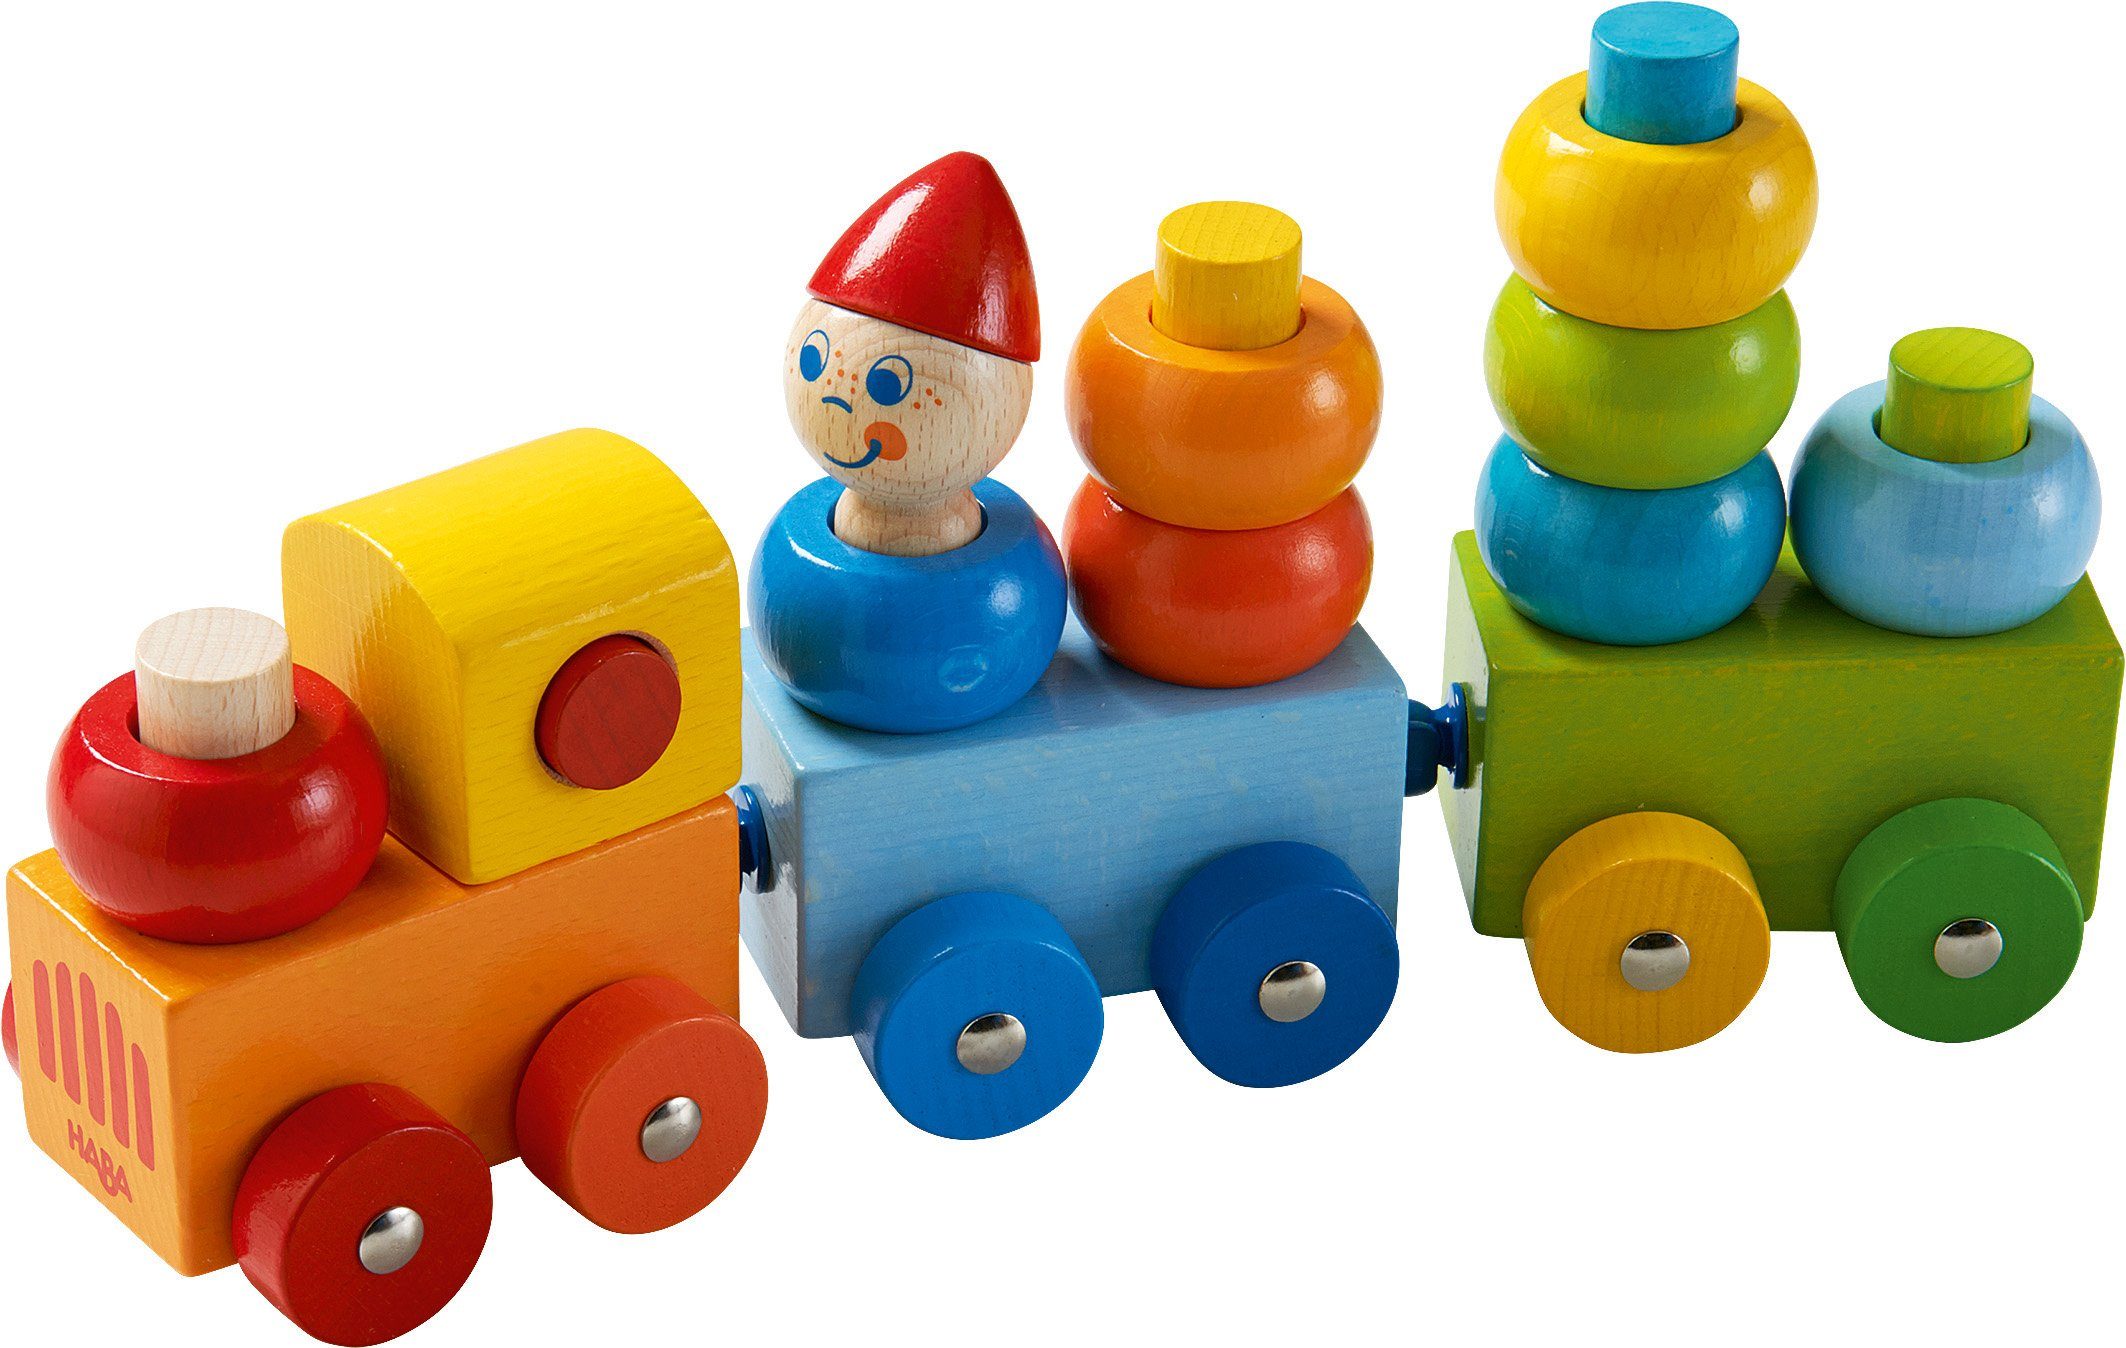 Adviseur wrijving tafel Haba Speelgoed spoorweg Speeltrein gekleurde rondjes van hout, made in  germany online verkrijgbaar | OTTO